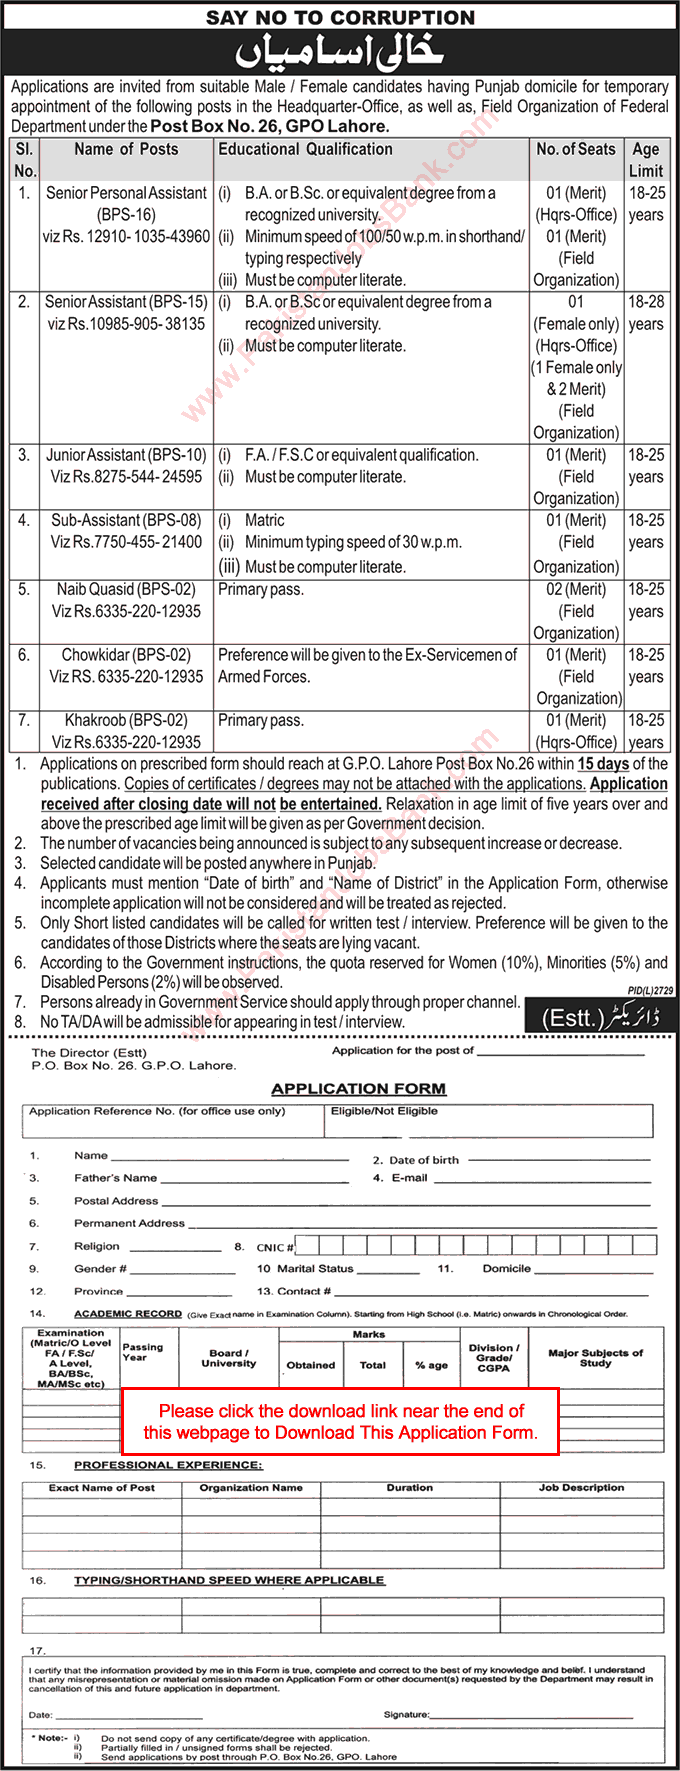 PO Box 26 GPO Lahore Jobs 2016 March Application Form Assistants, Naib Qasid, Chowkidar & Khakroob Latest